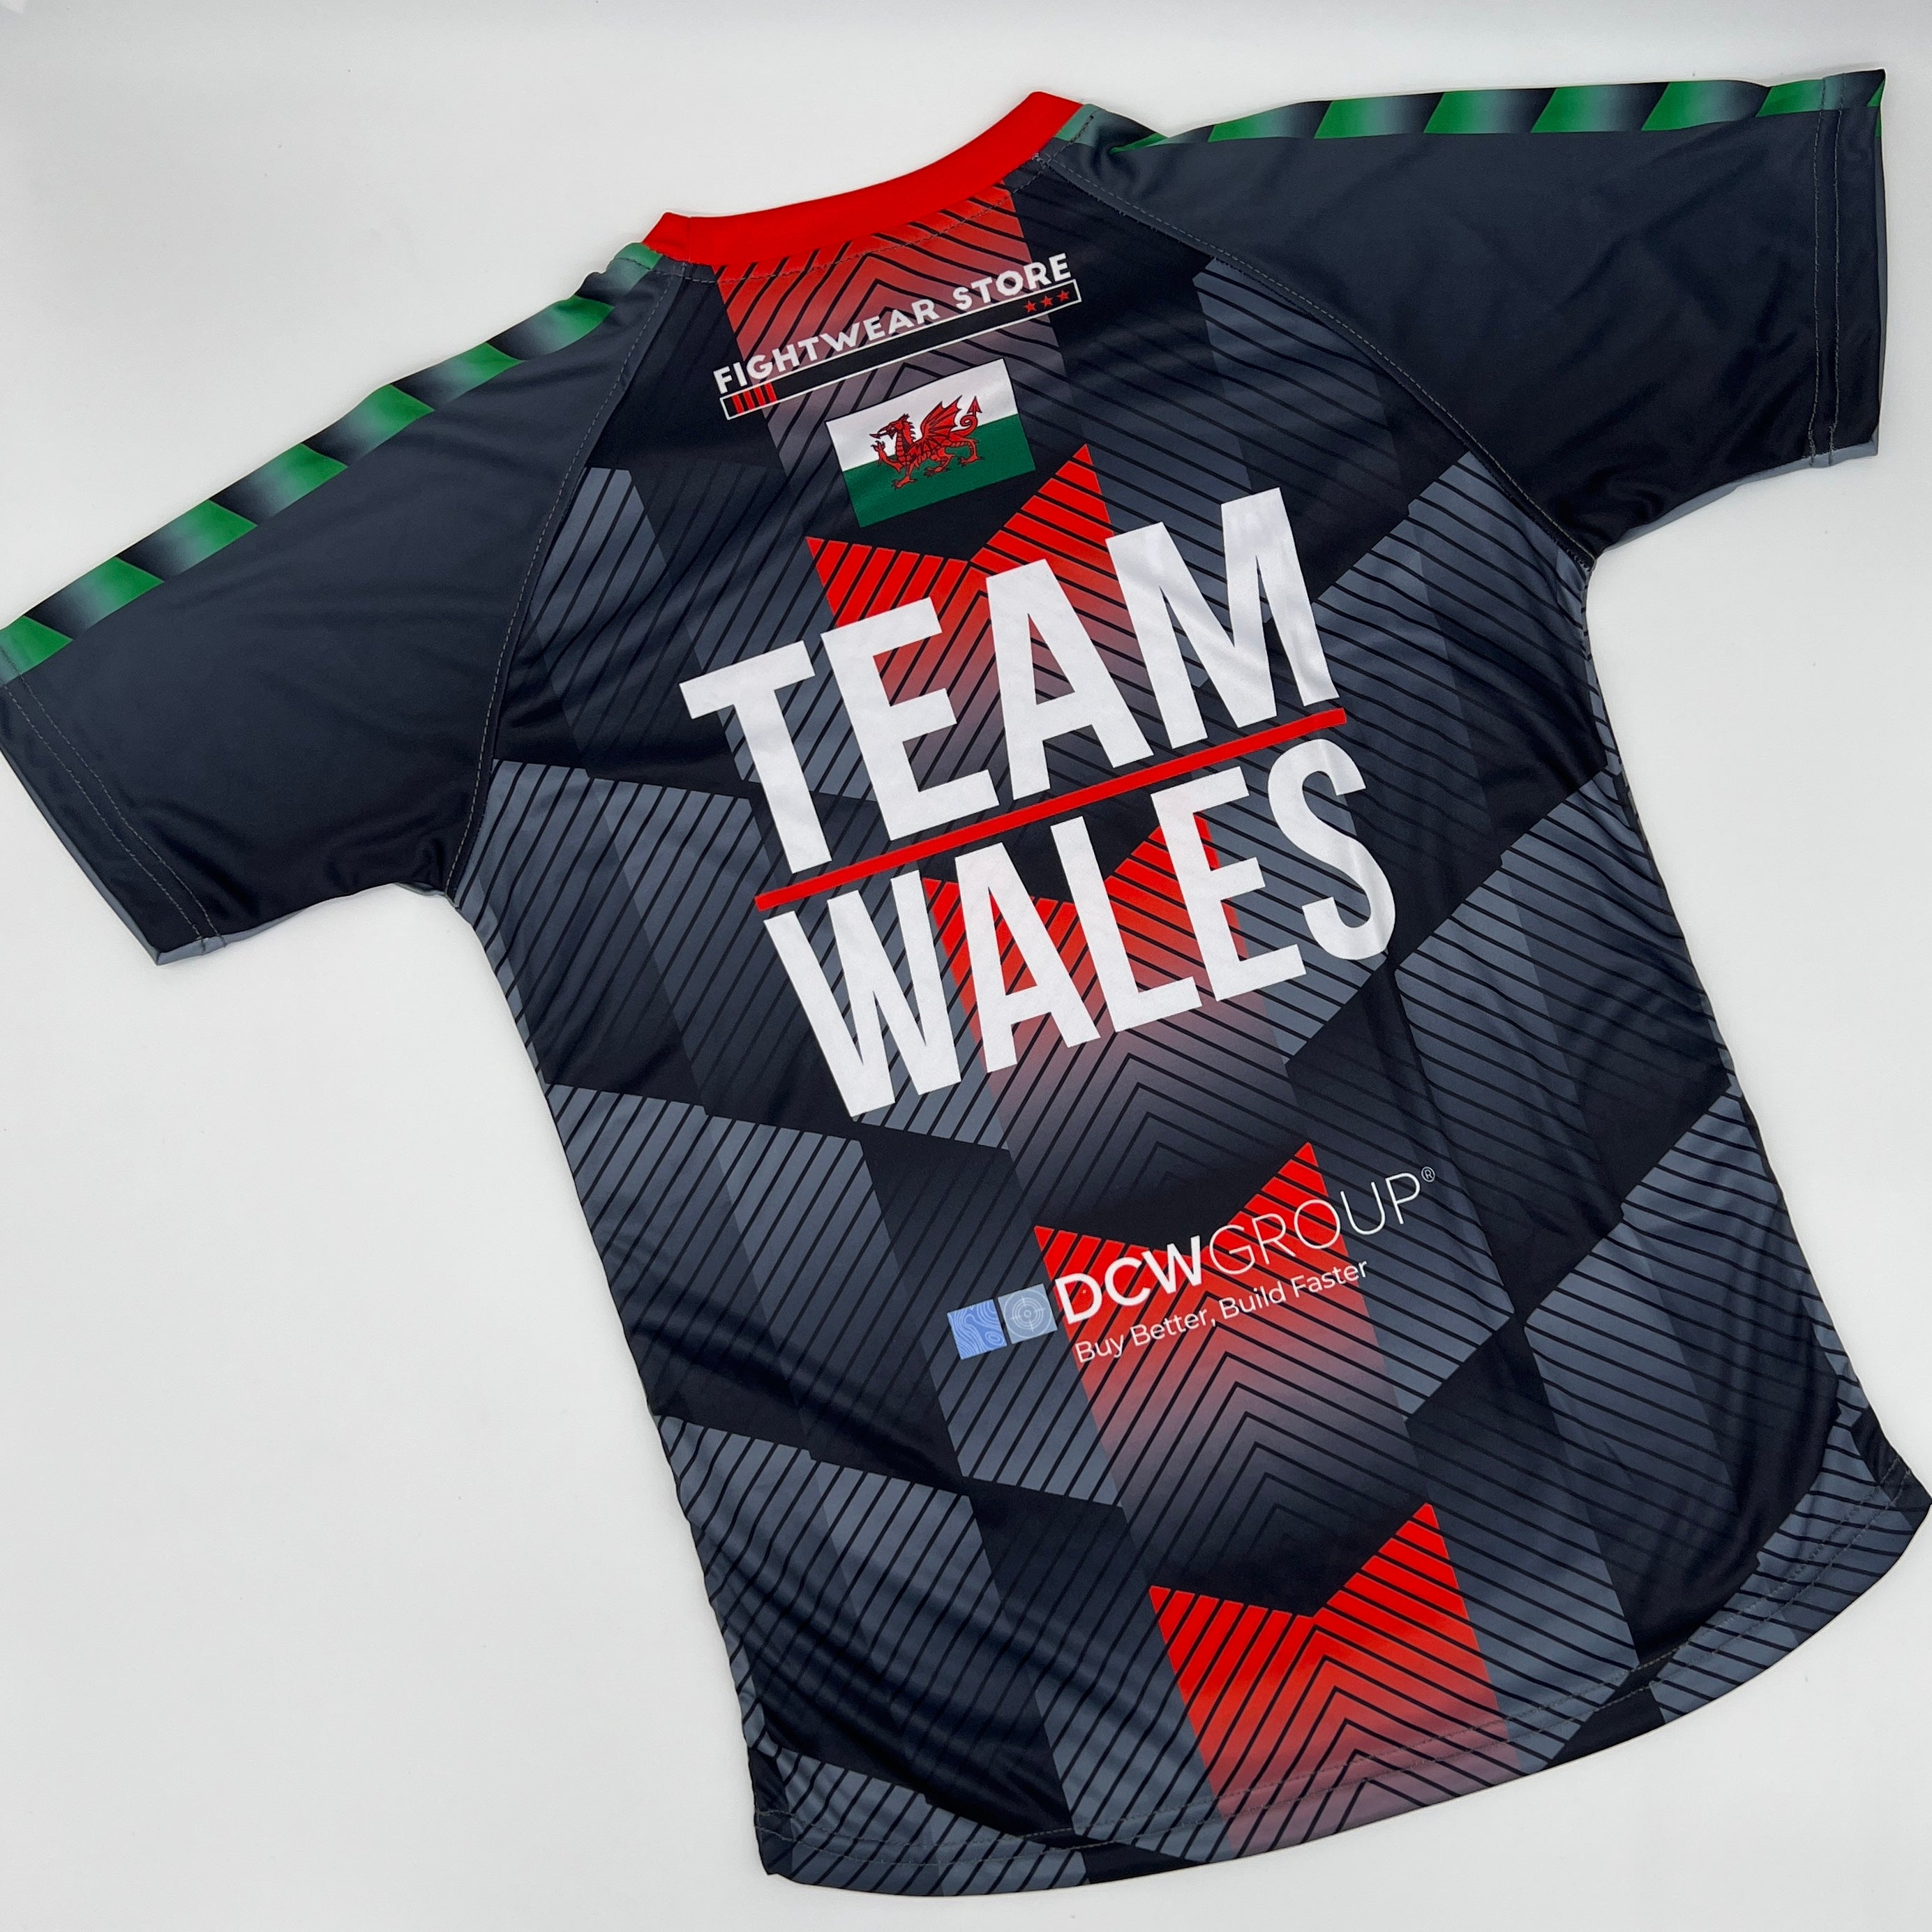 Welsh Kickboxing National Team T-Shirt (2022)